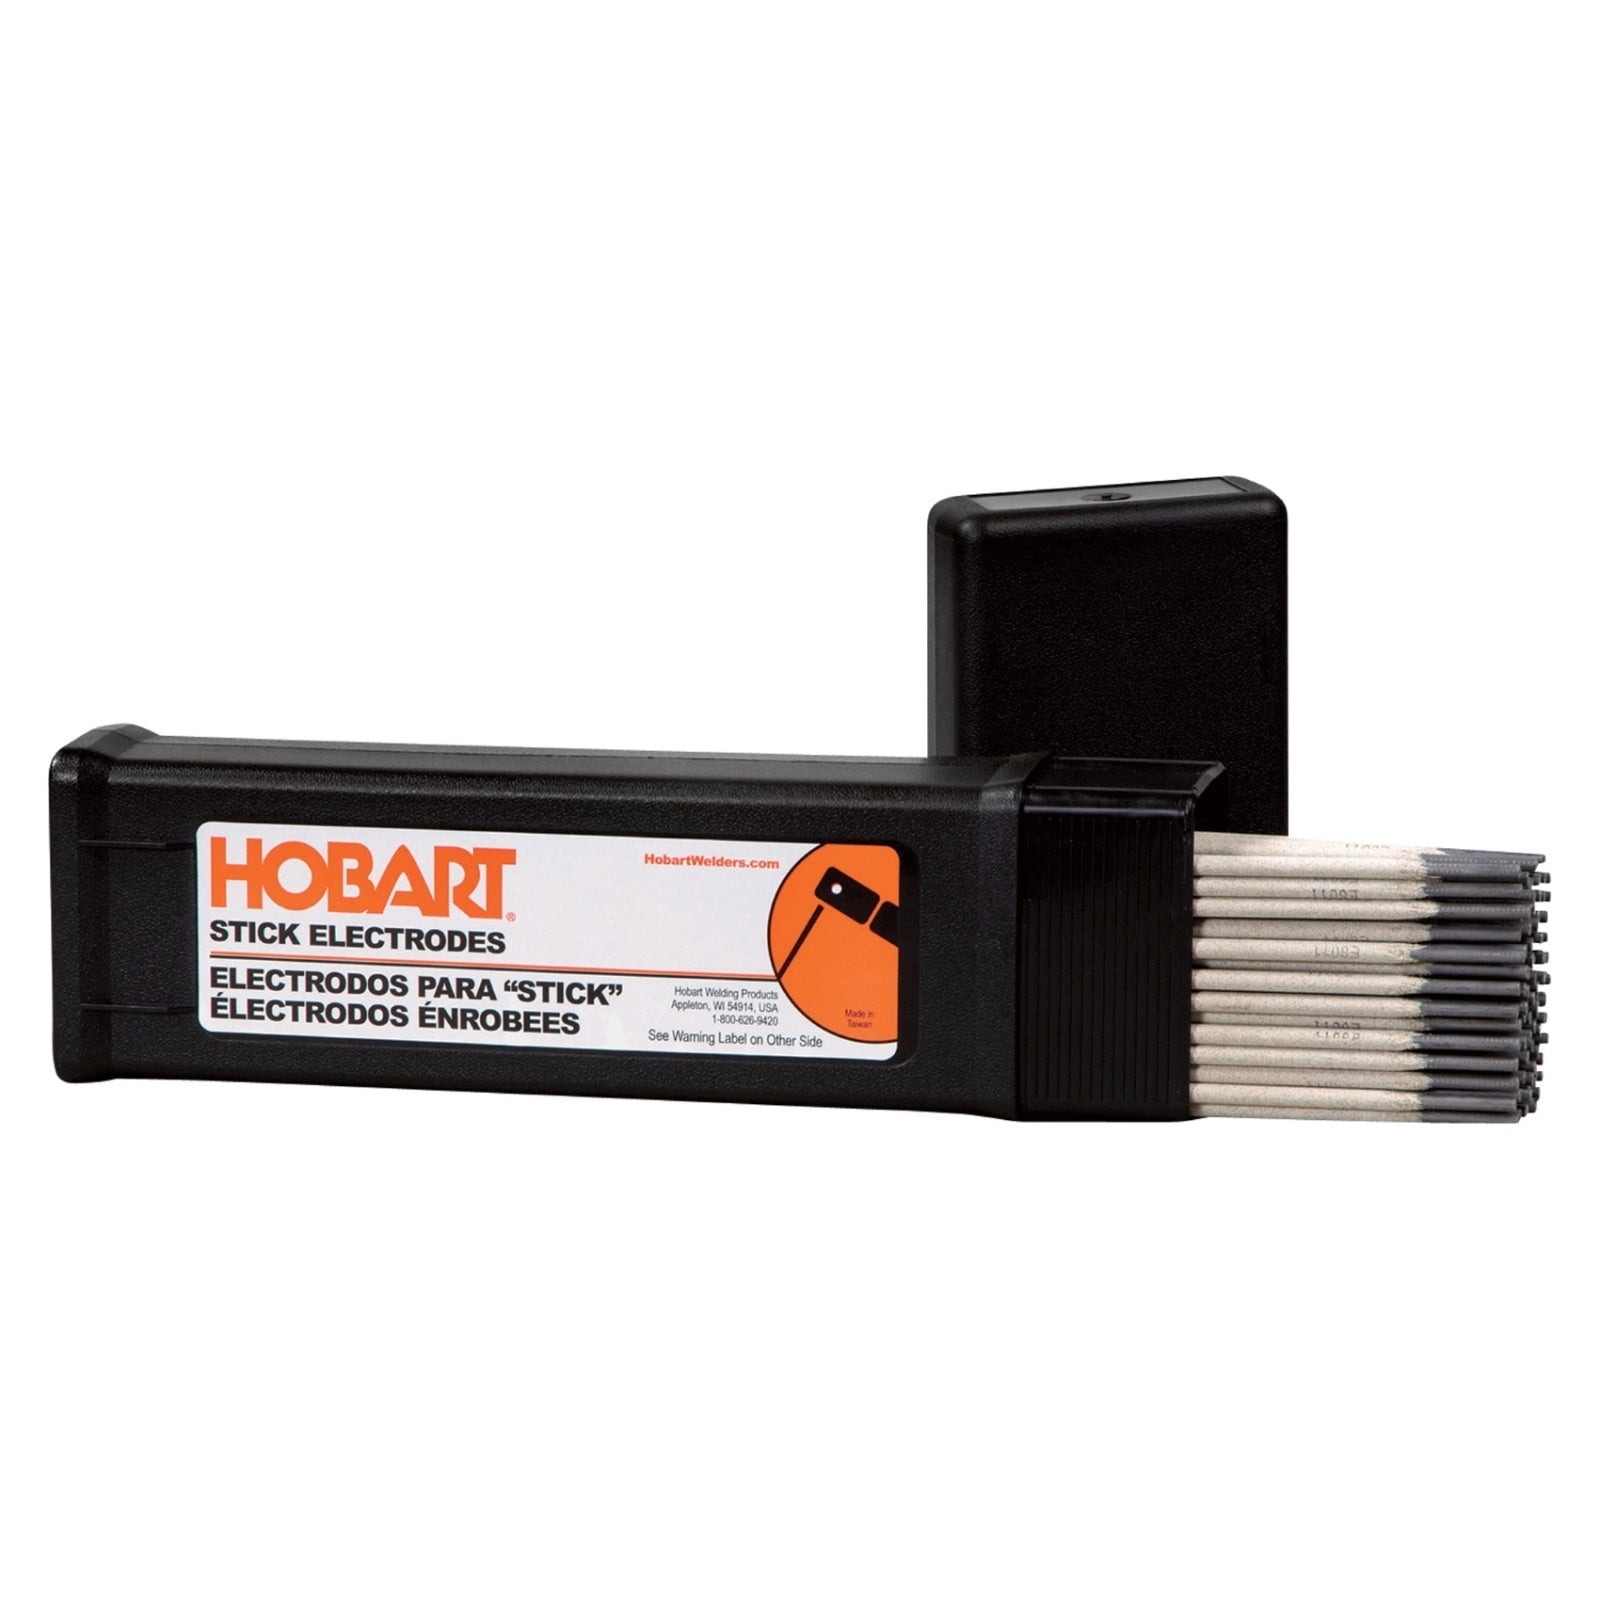 Hobart 418 (7018) 1/8" Stick Electrodes 5# Box (S119944-045)